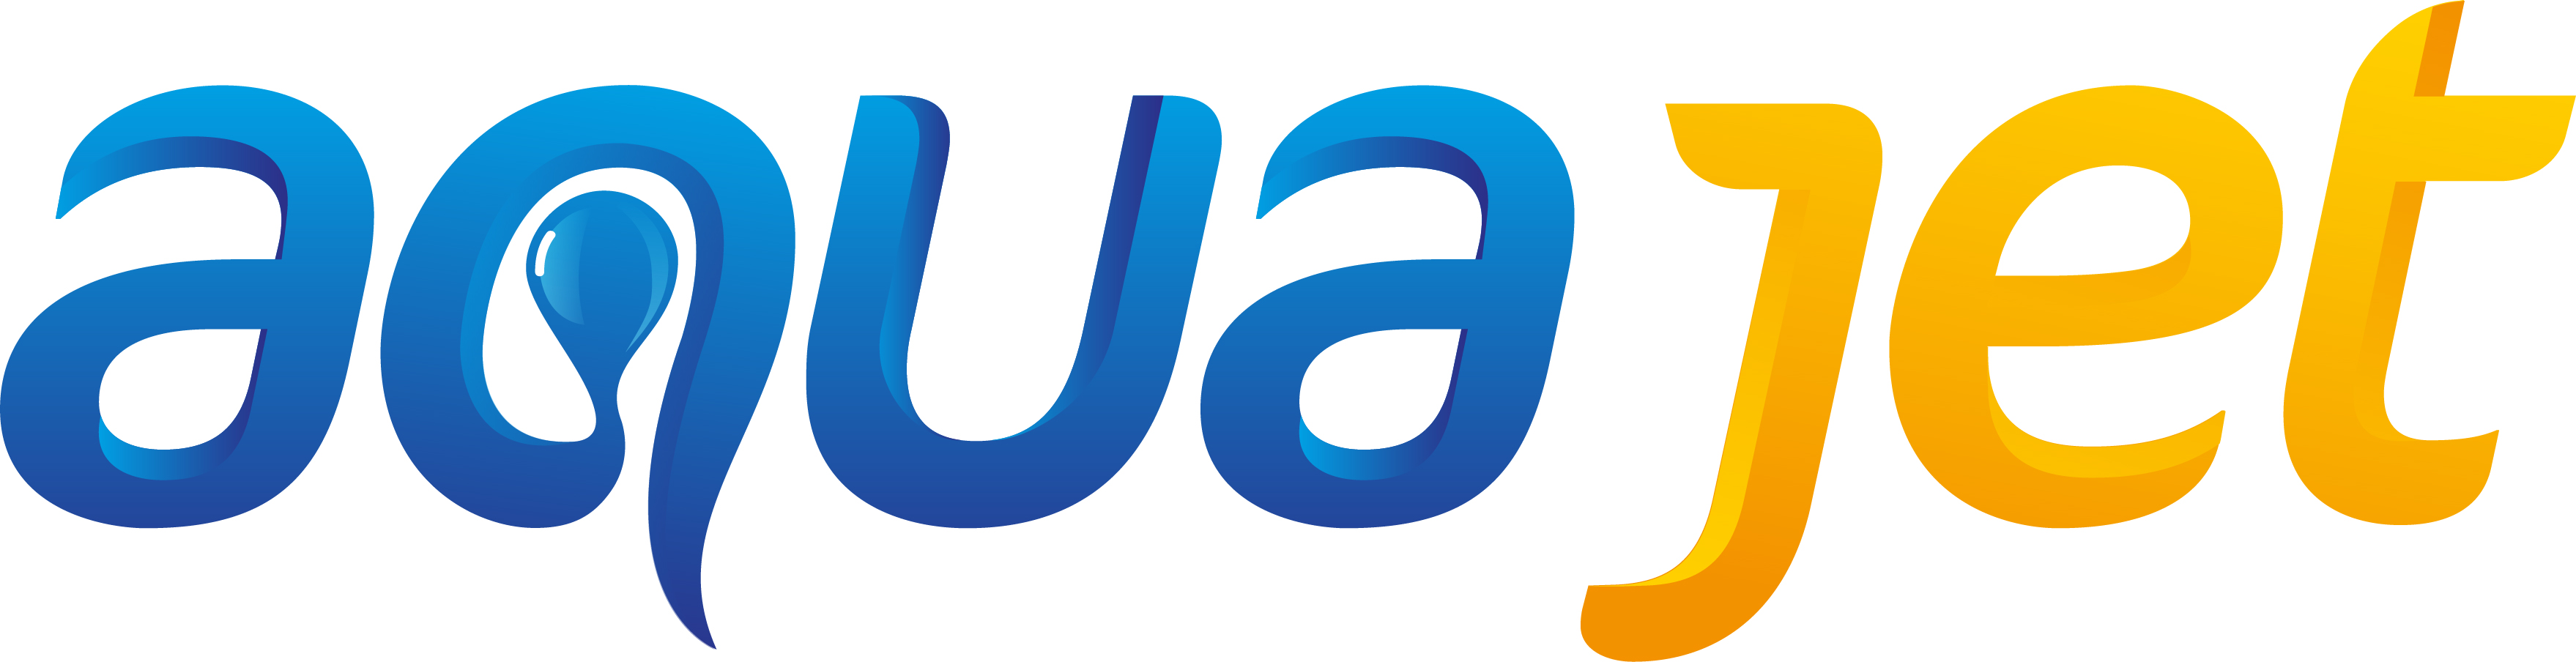 Aqua Jet_02 logo design by logo designer John Mills Ltd for your inspiration and for the worlds largest logo competition